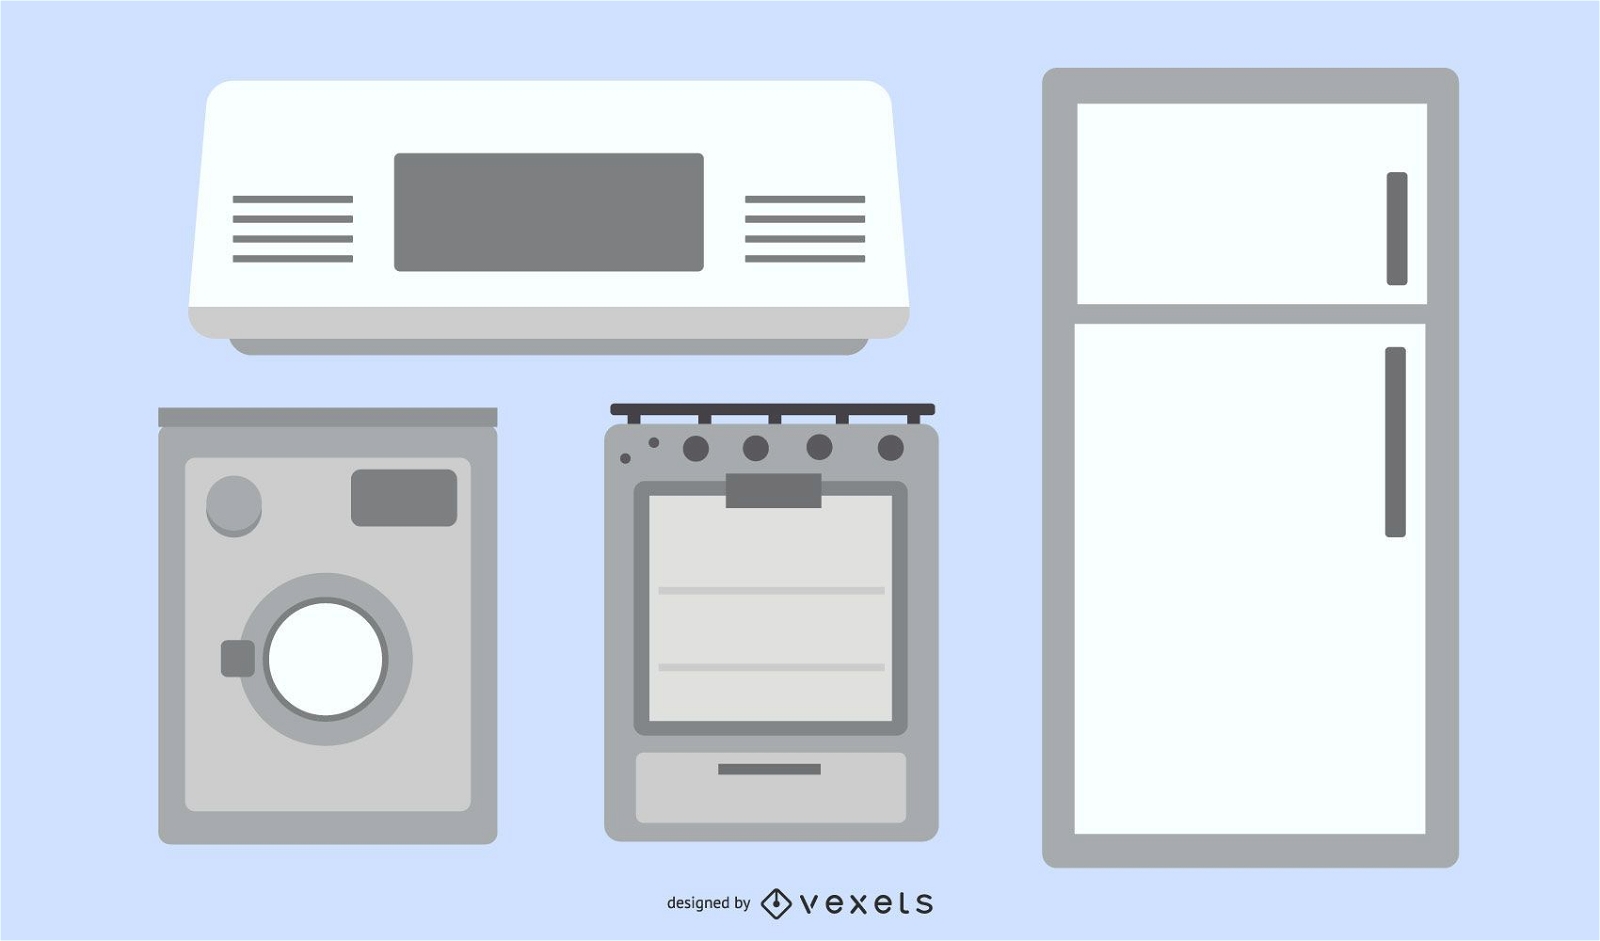 Premium Vector  Household kitchen electrical appliances